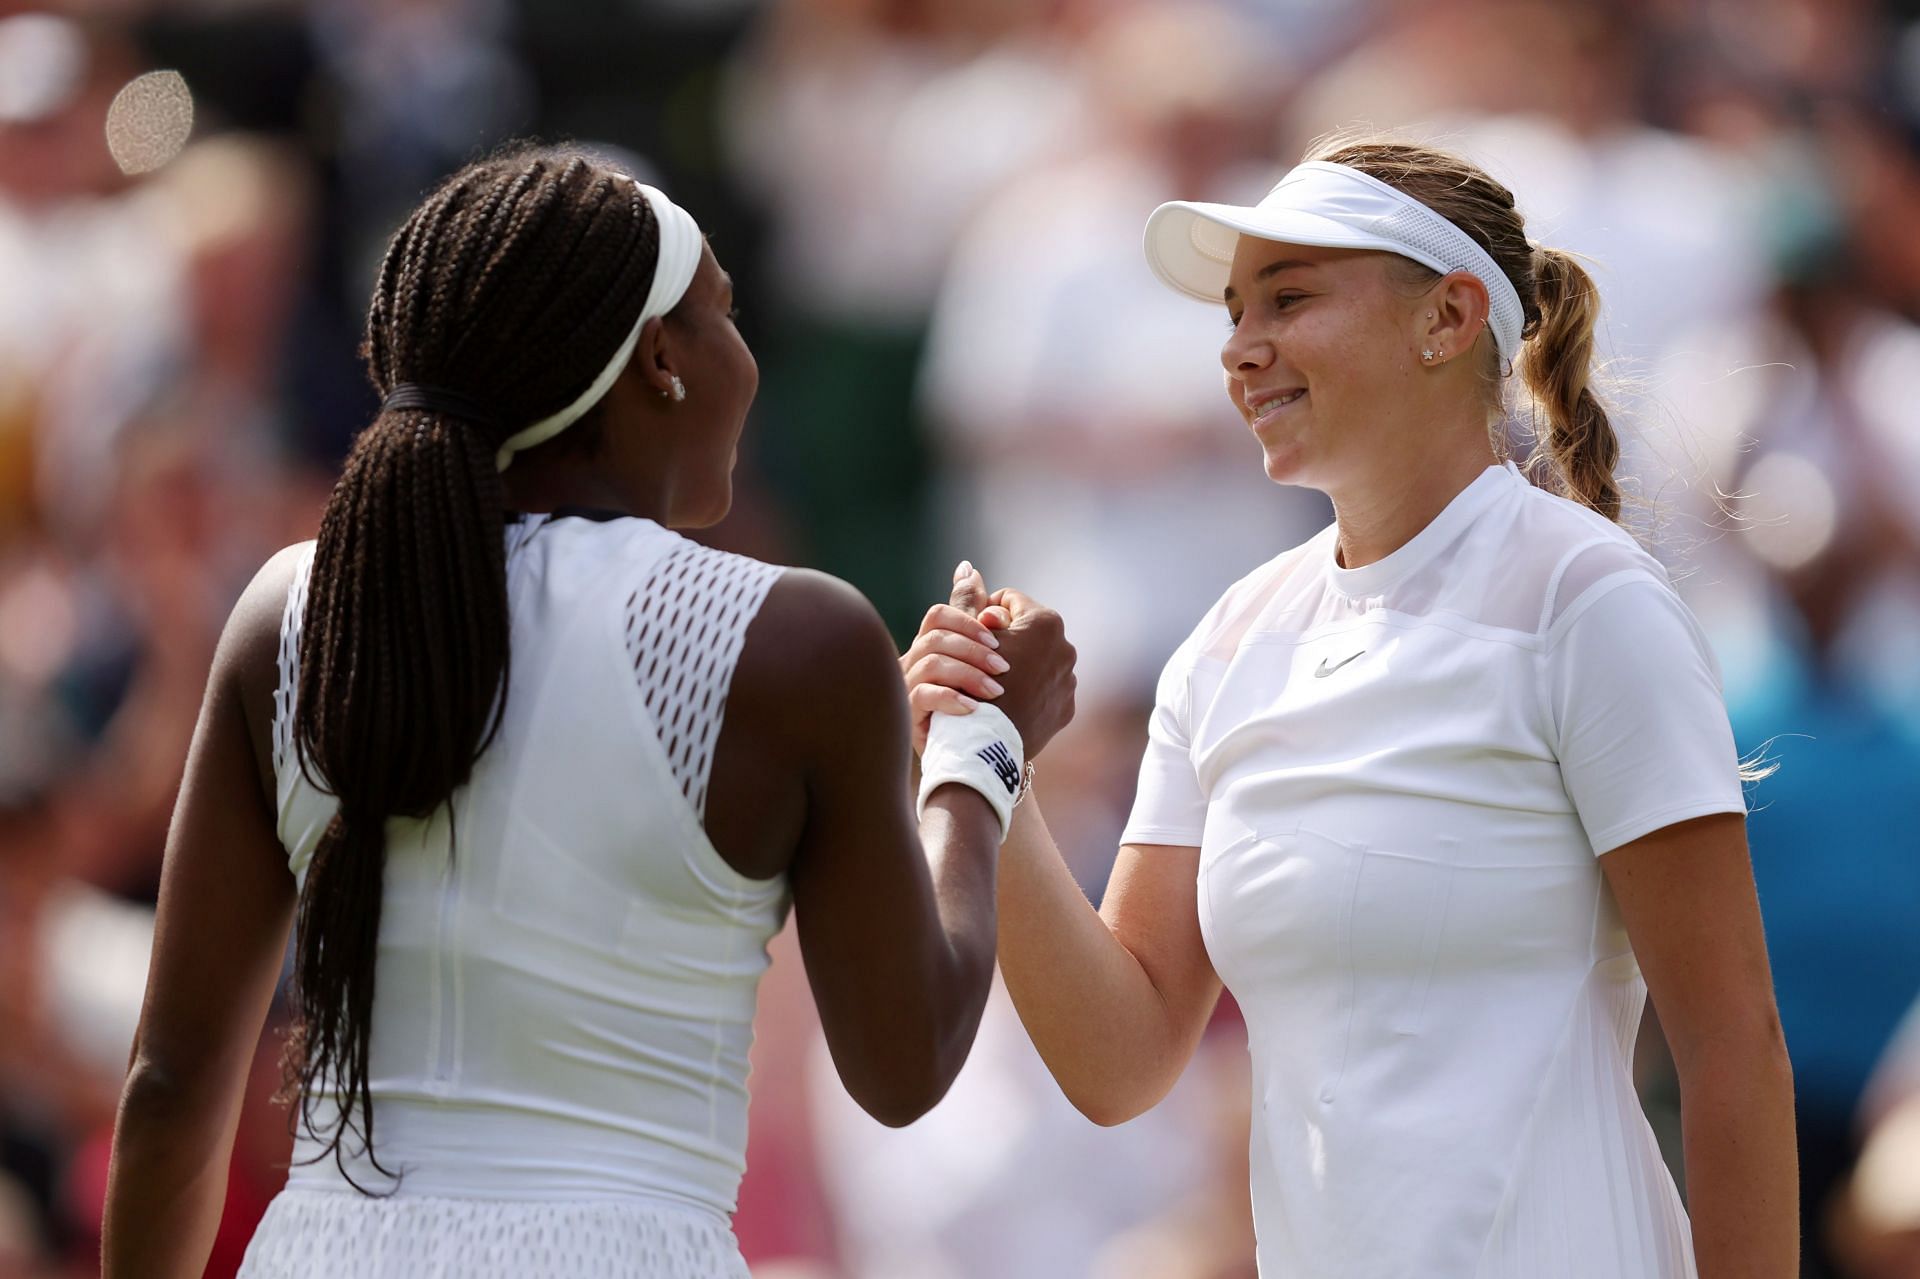 Coco Gauff lost to Amanda Anisimova at Wimbledon 2022